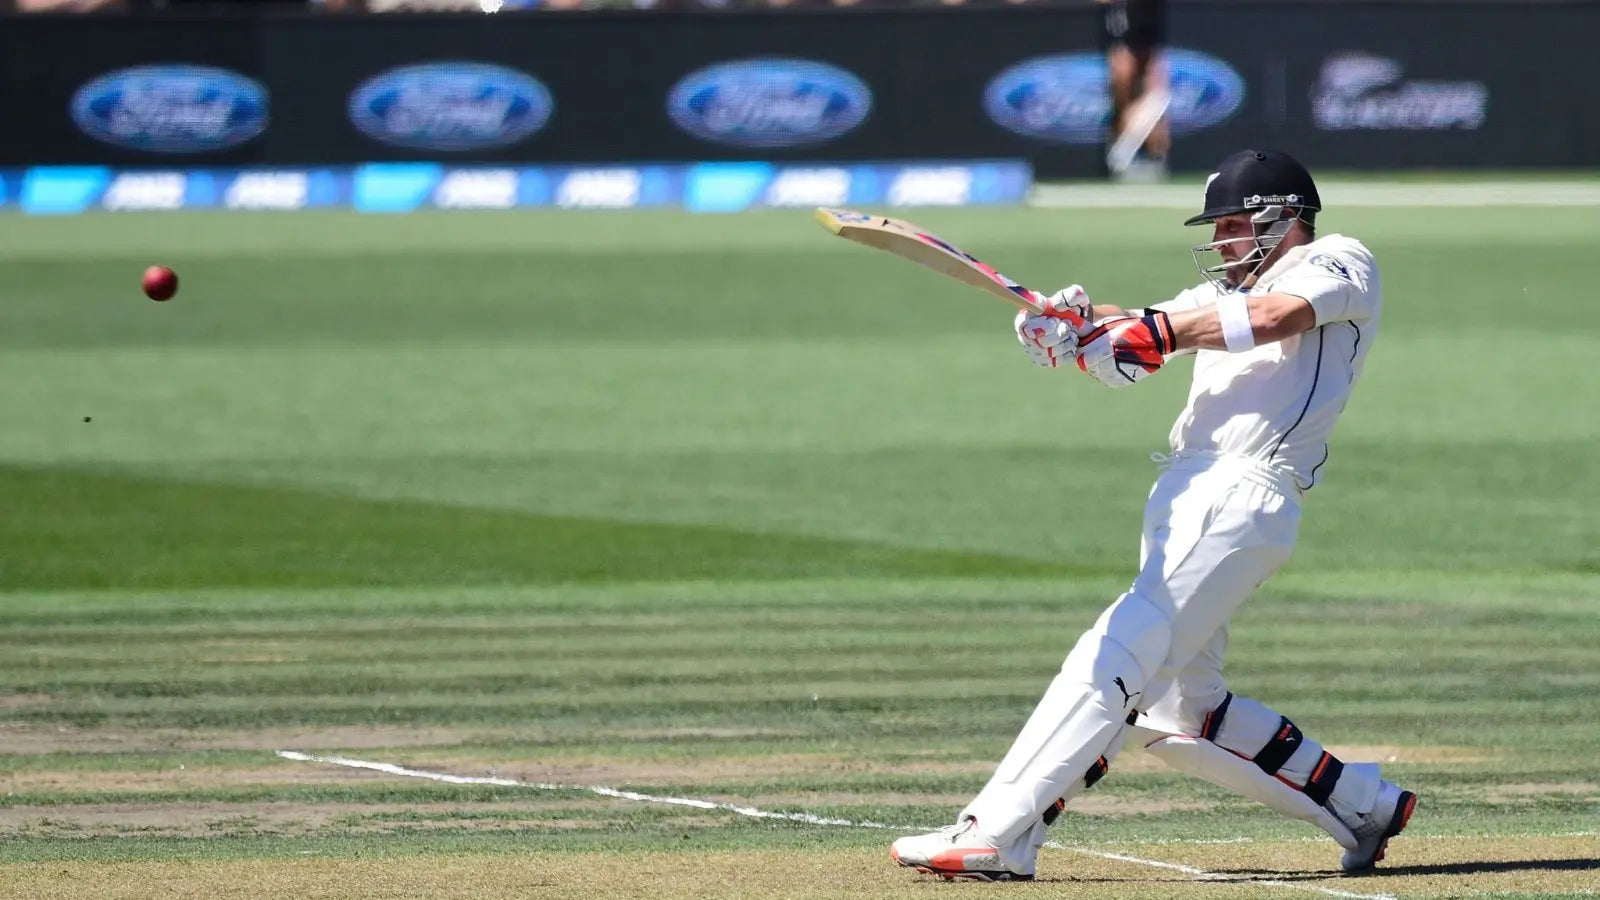 Brendam McCullum batting when he scored the fastest century in test cricket vs Australia